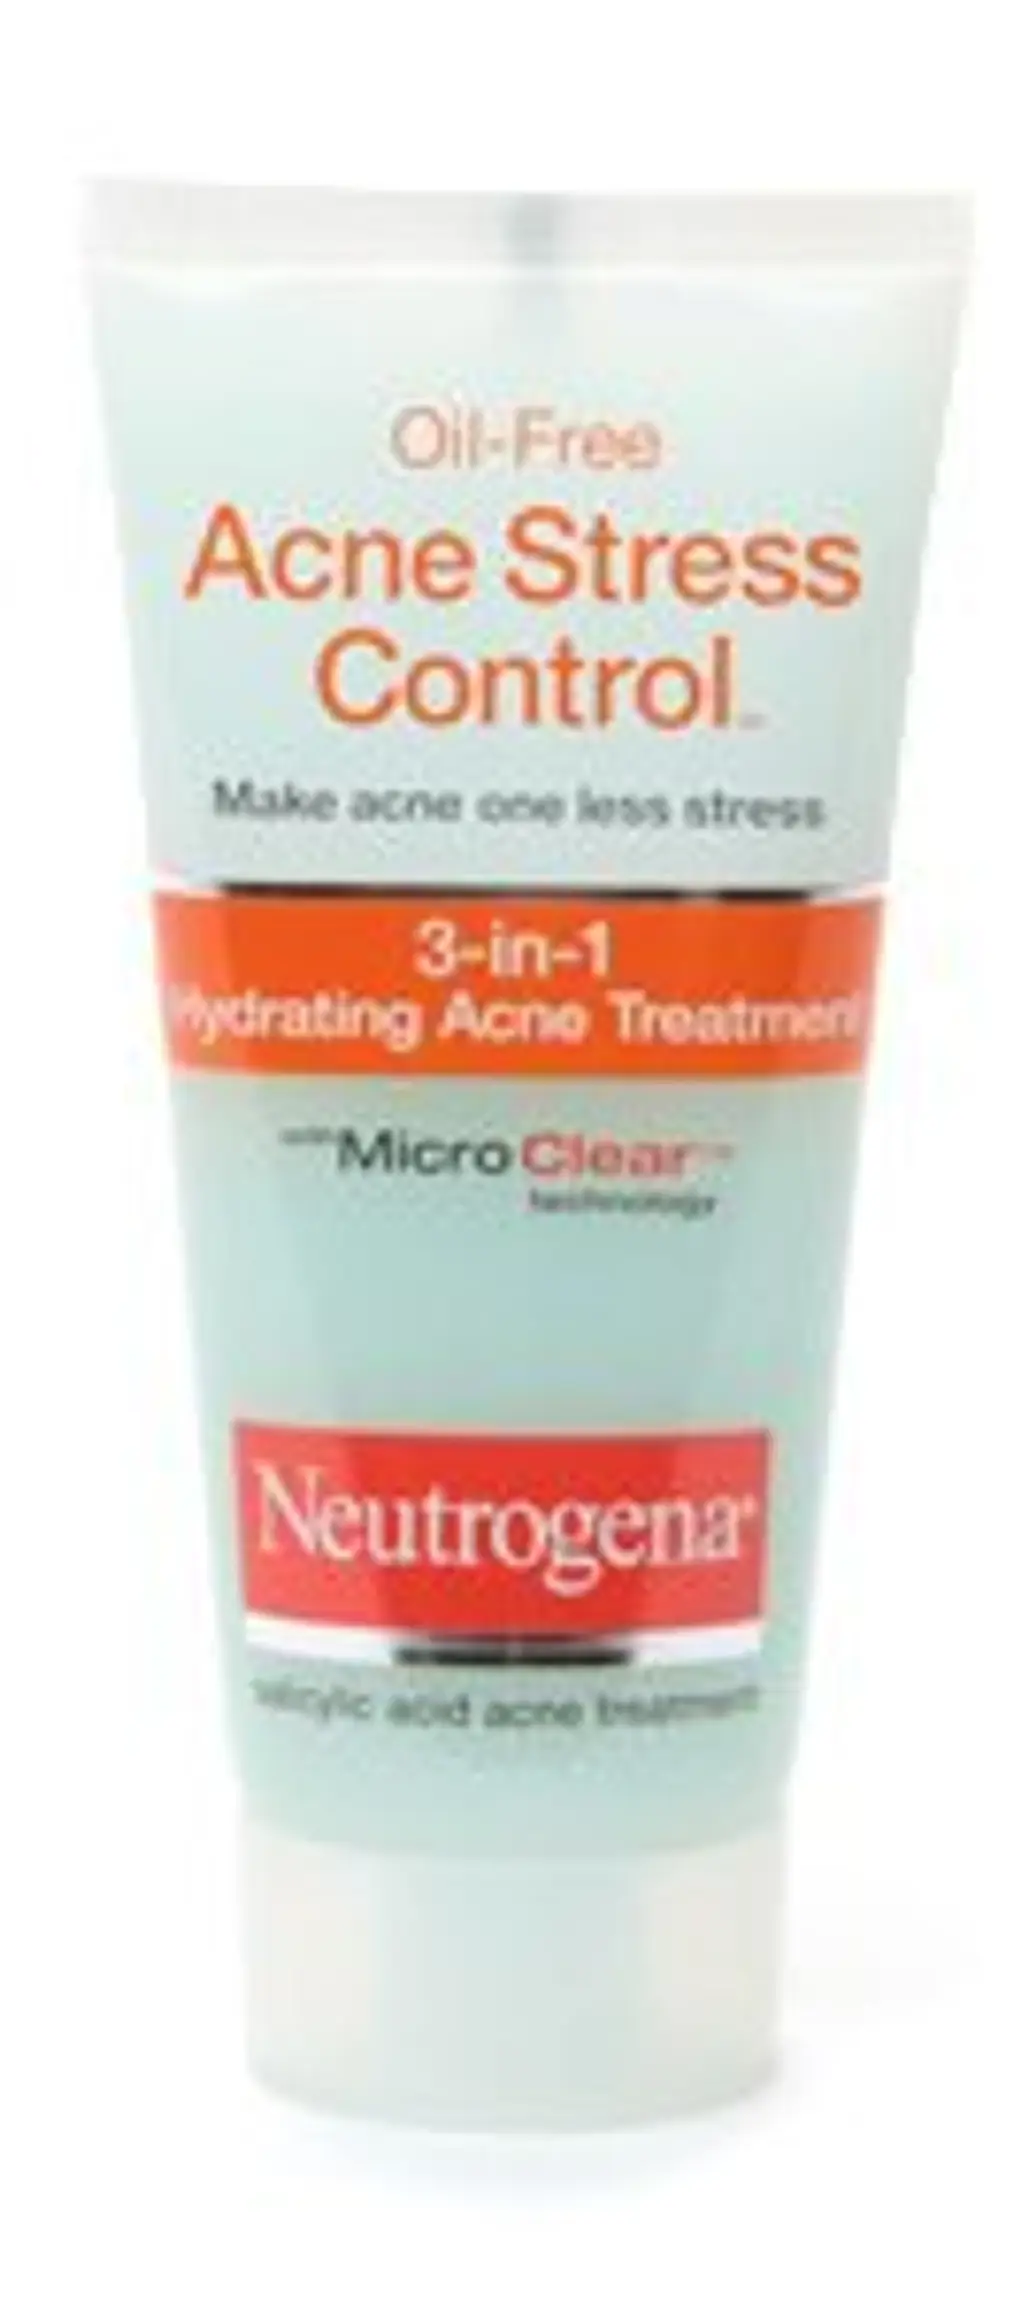 Oil-Free Acne Stress Control 3-in-1 Hydrating Acne Treatment by Neutrogena ...